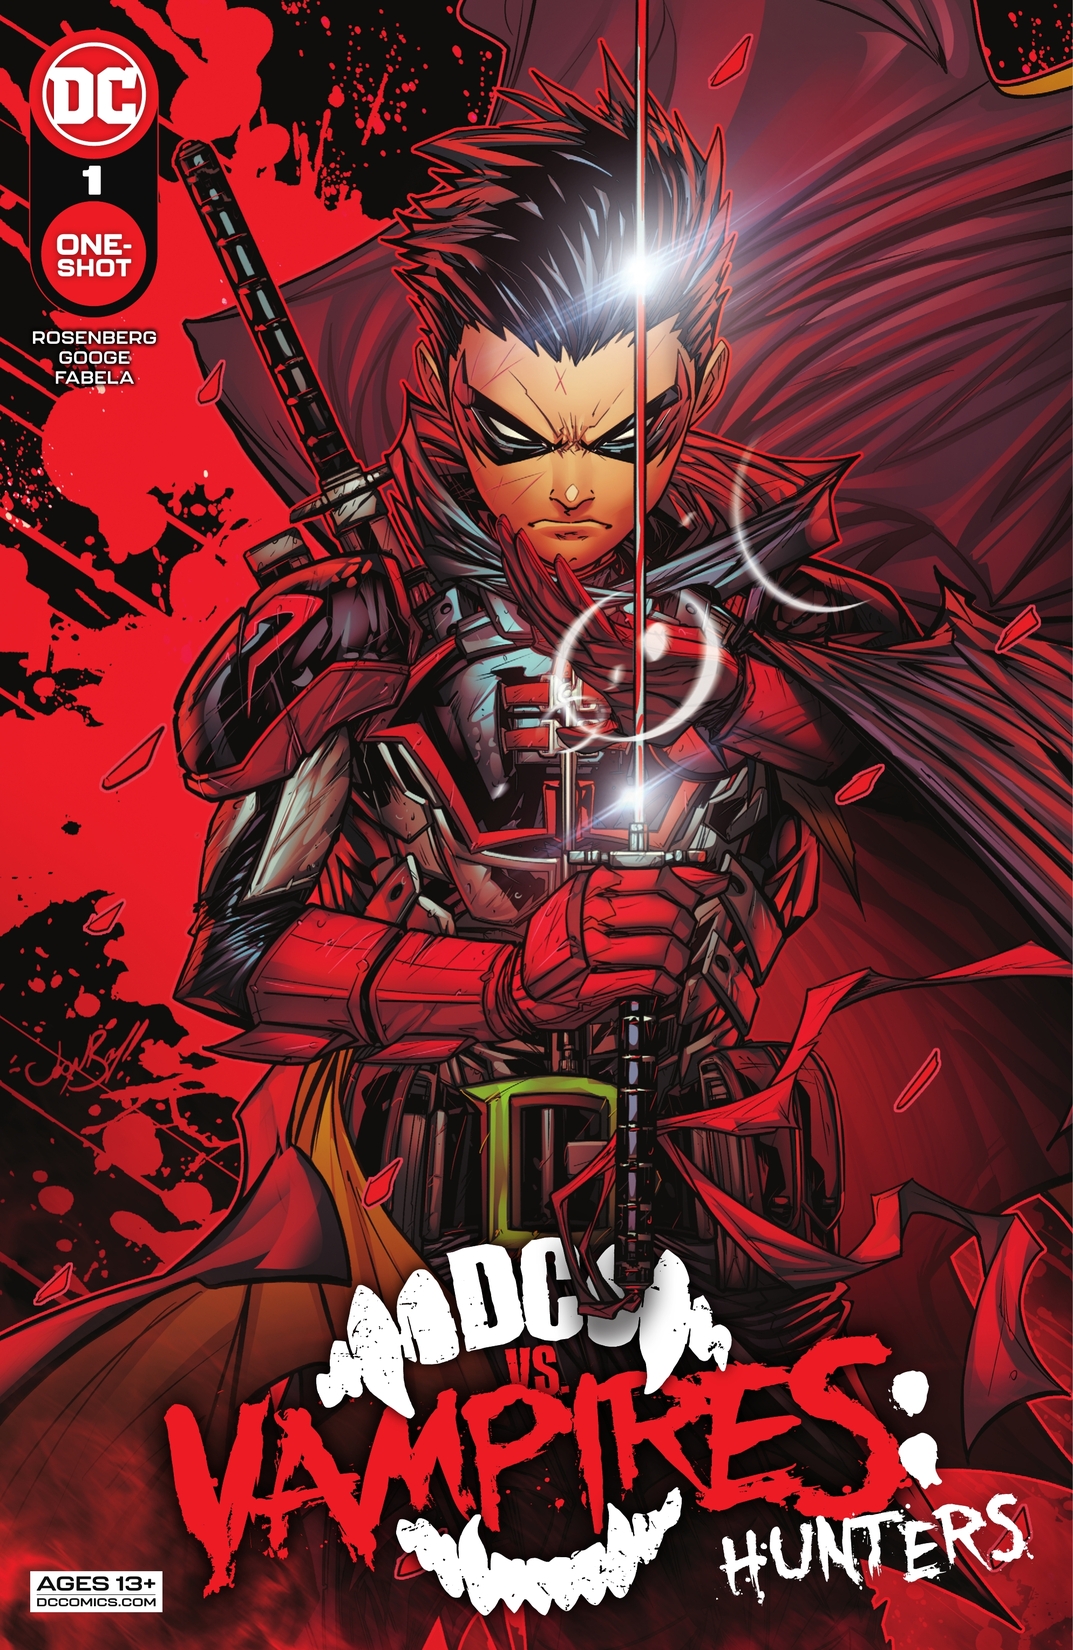 DC vs. Vampires - Hunters #1 preview images